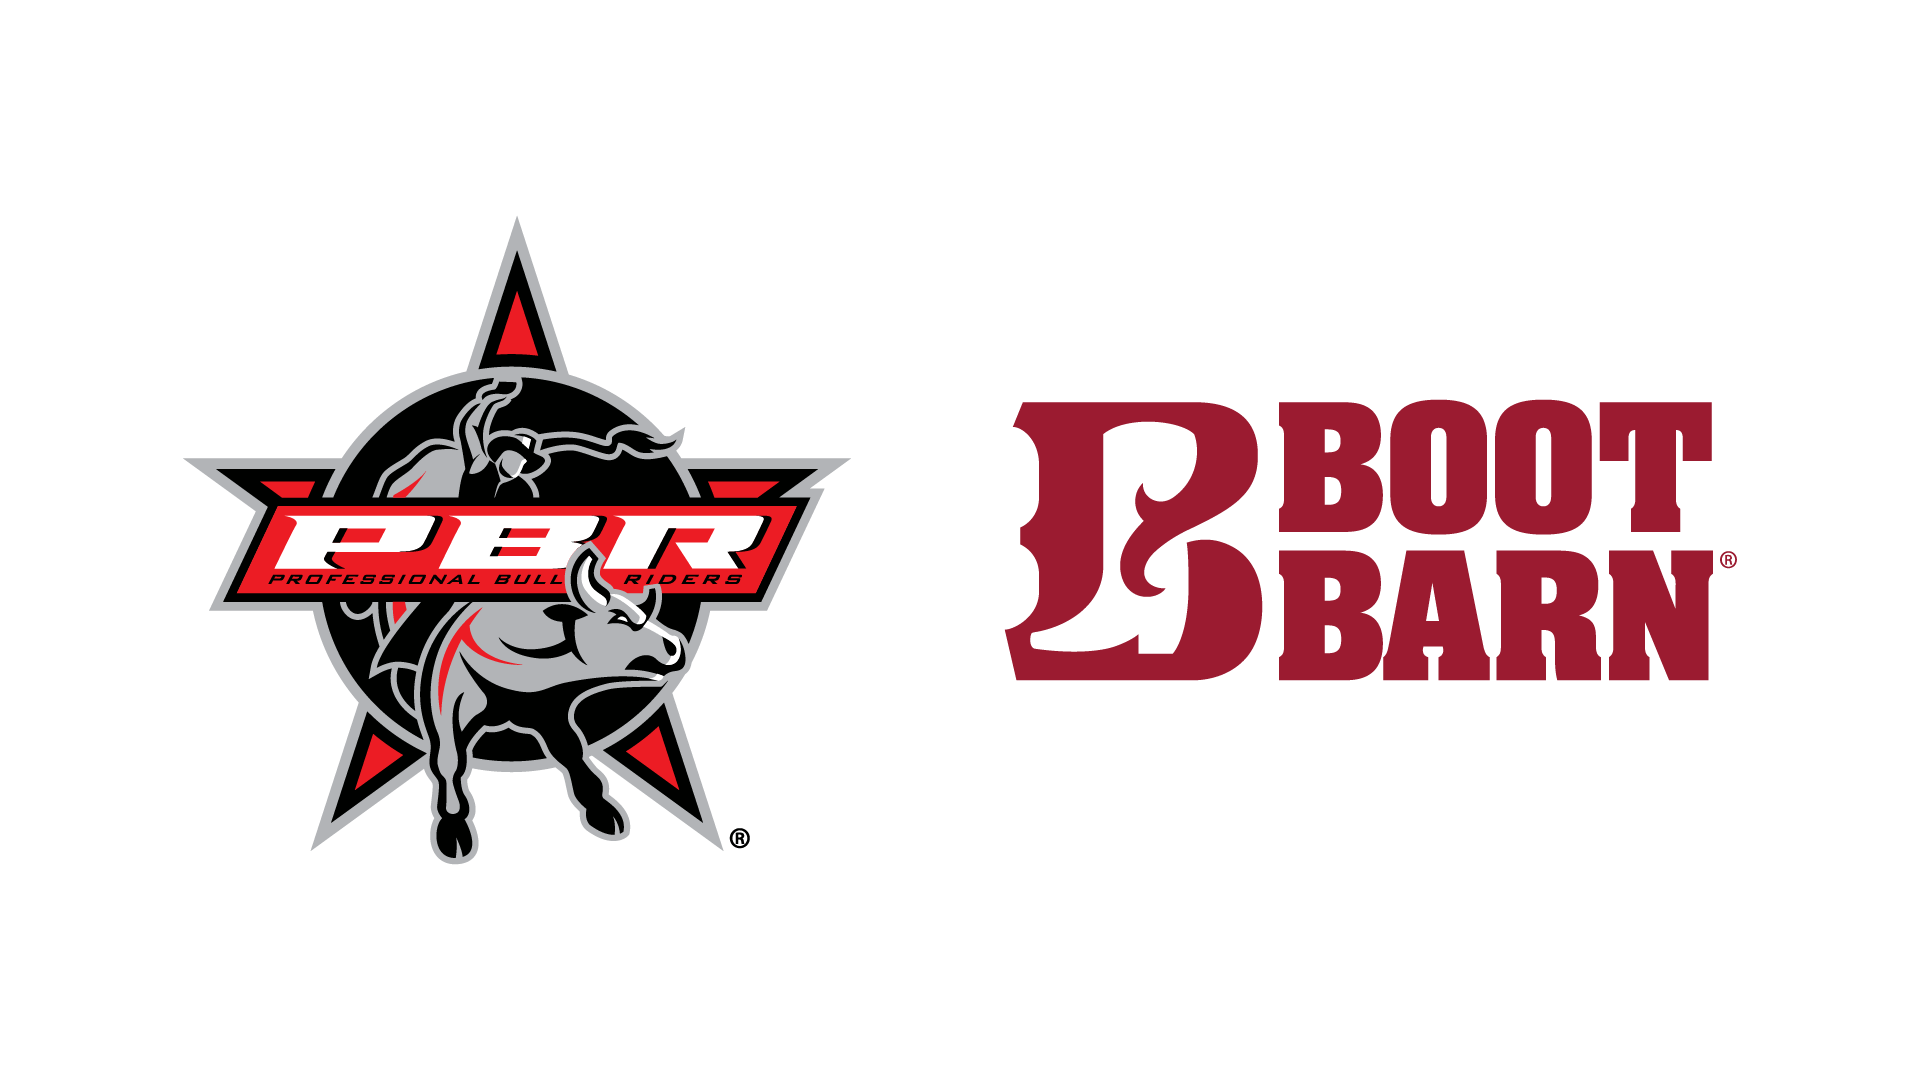 BootBarn Logo - Professional Bull Riders & Boot Barn (NYSE: BOOT) Ring the NYSE ...